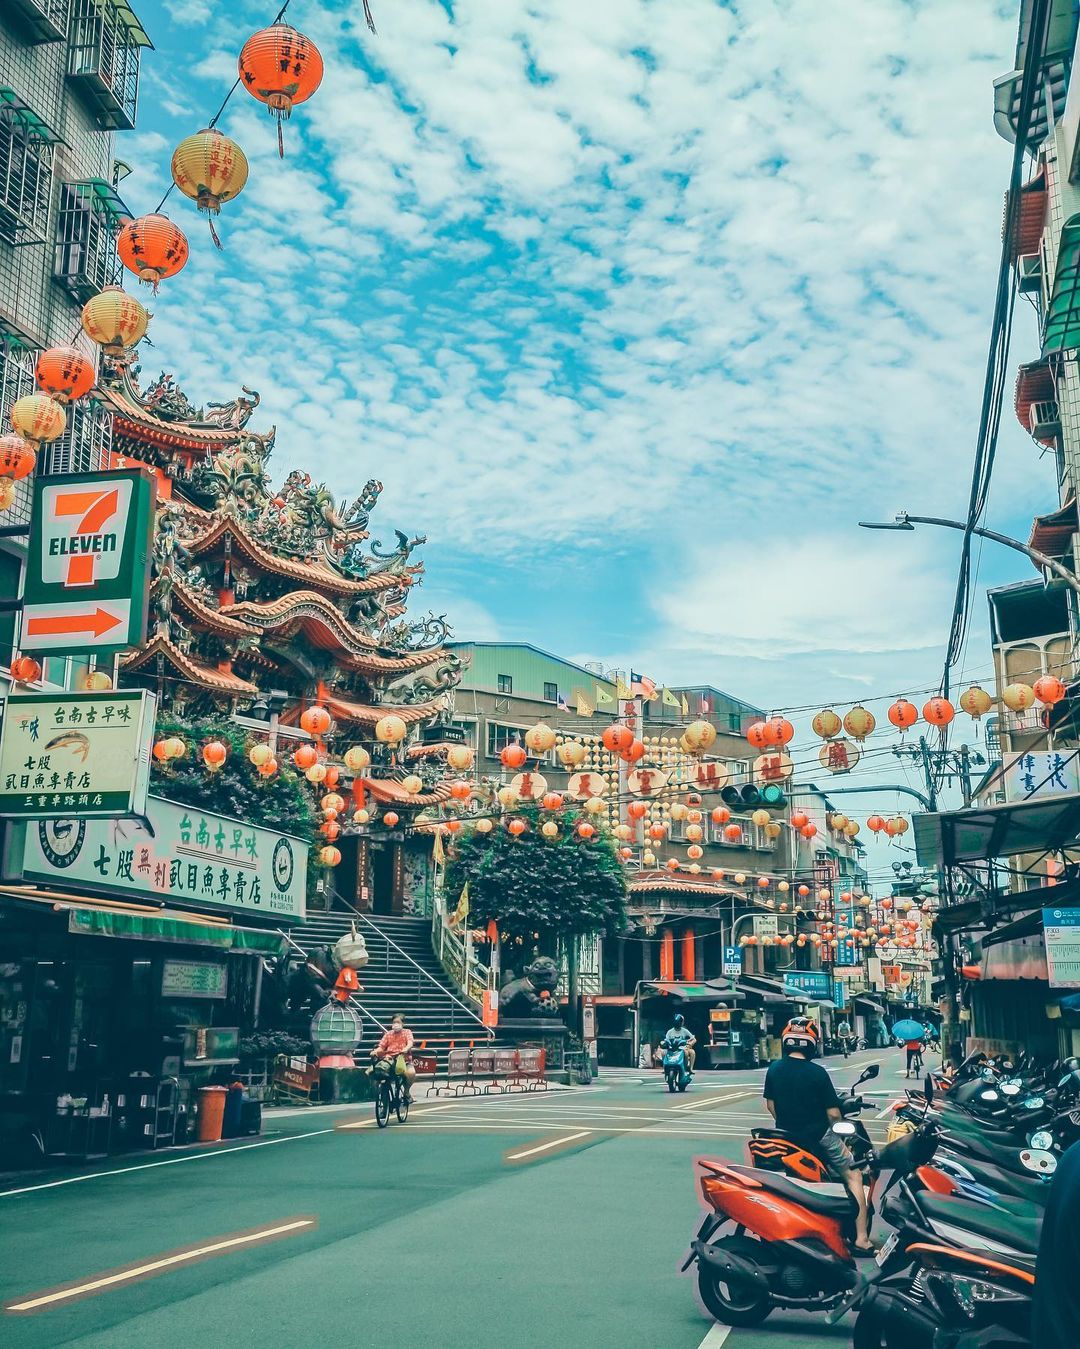 Twitter 上的 台湾 新北の旅人 公式 このような街の景色は台湾の独特な美学です 一緒に頑張って早く通常の生活に戻りますように コロナ禍を乗り越えましょう 絶景 台湾風景 Photo By Ig Endao Life T Co Dgt3rd19se Twitter